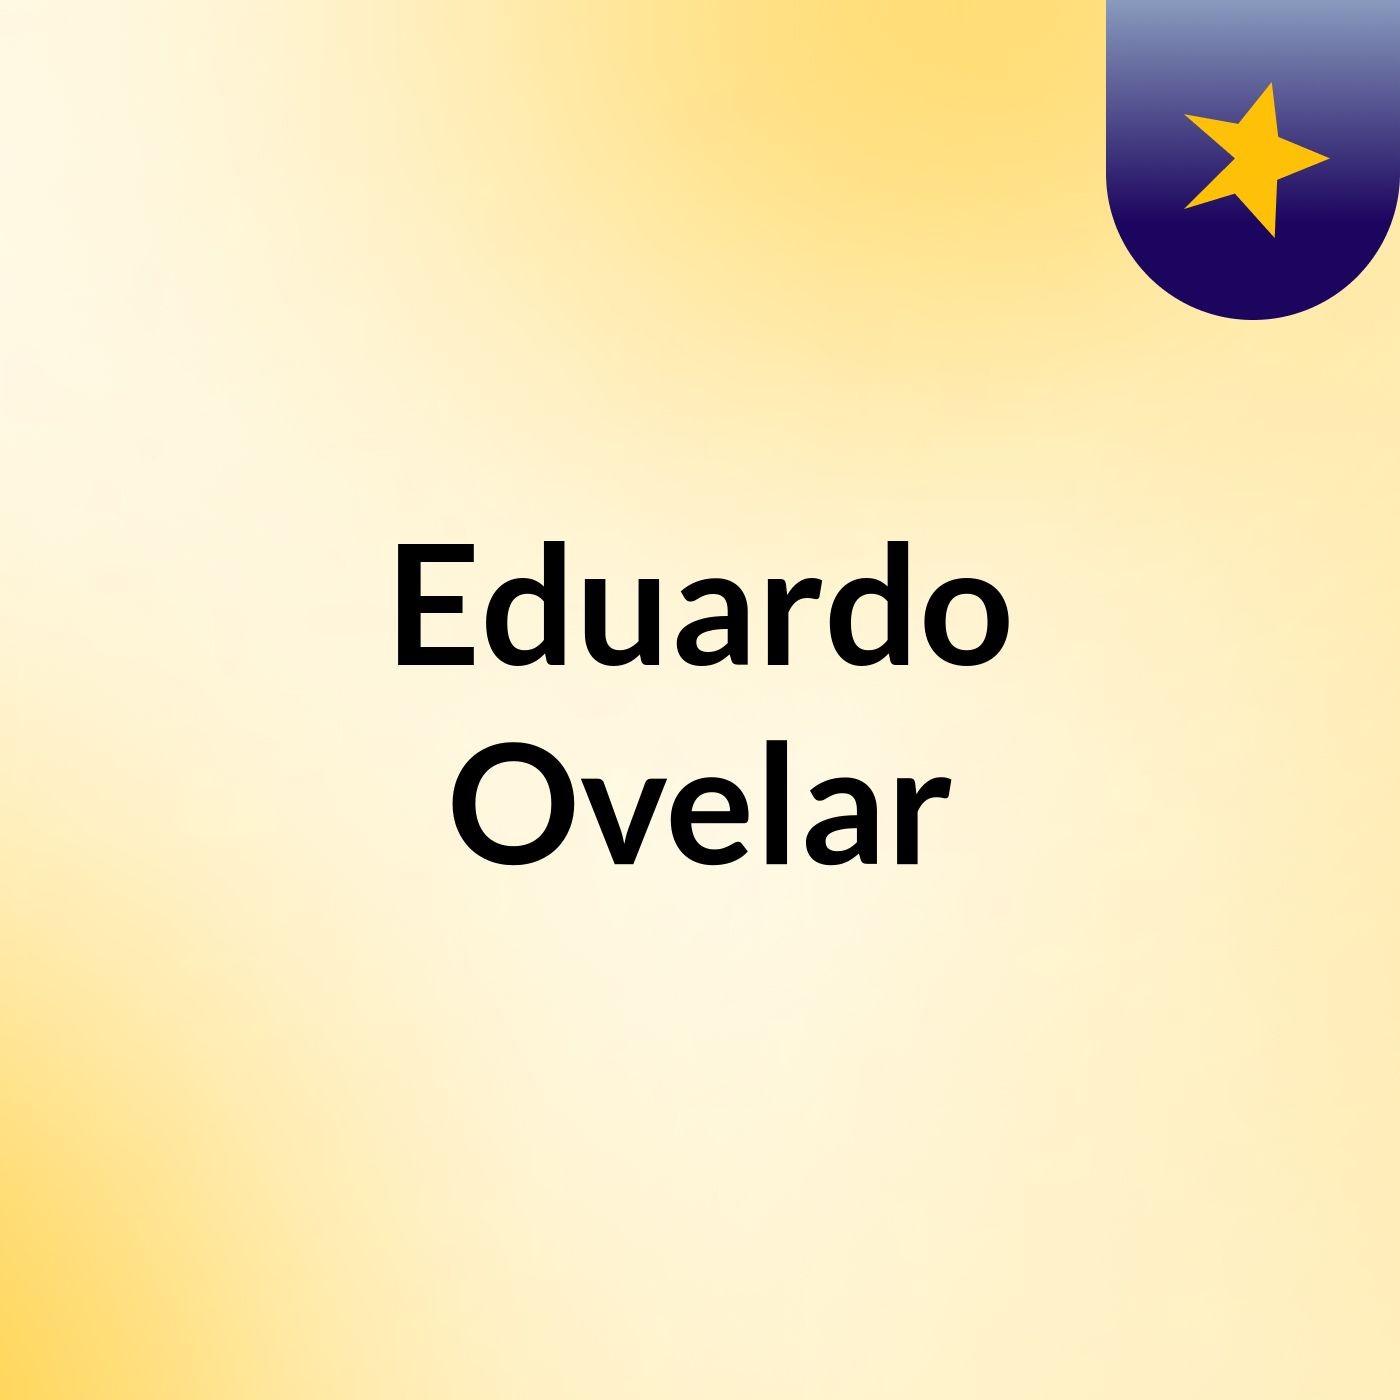 Eduardo Ovelar